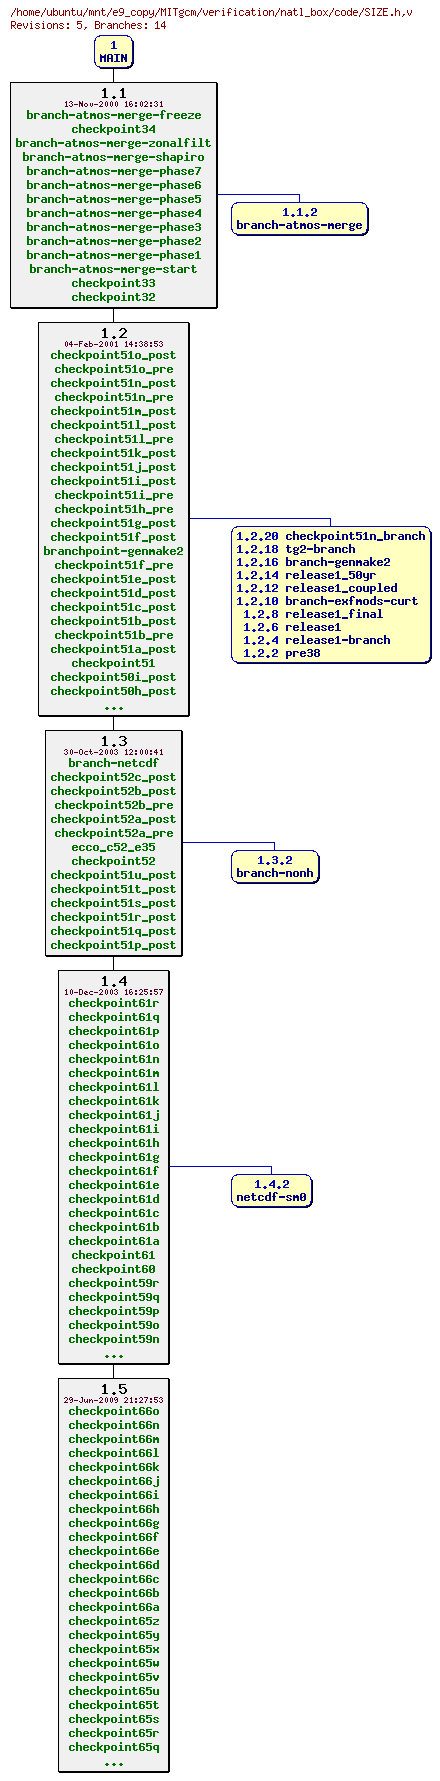 Revisions of MITgcm/verification/natl_box/code/SIZE.h